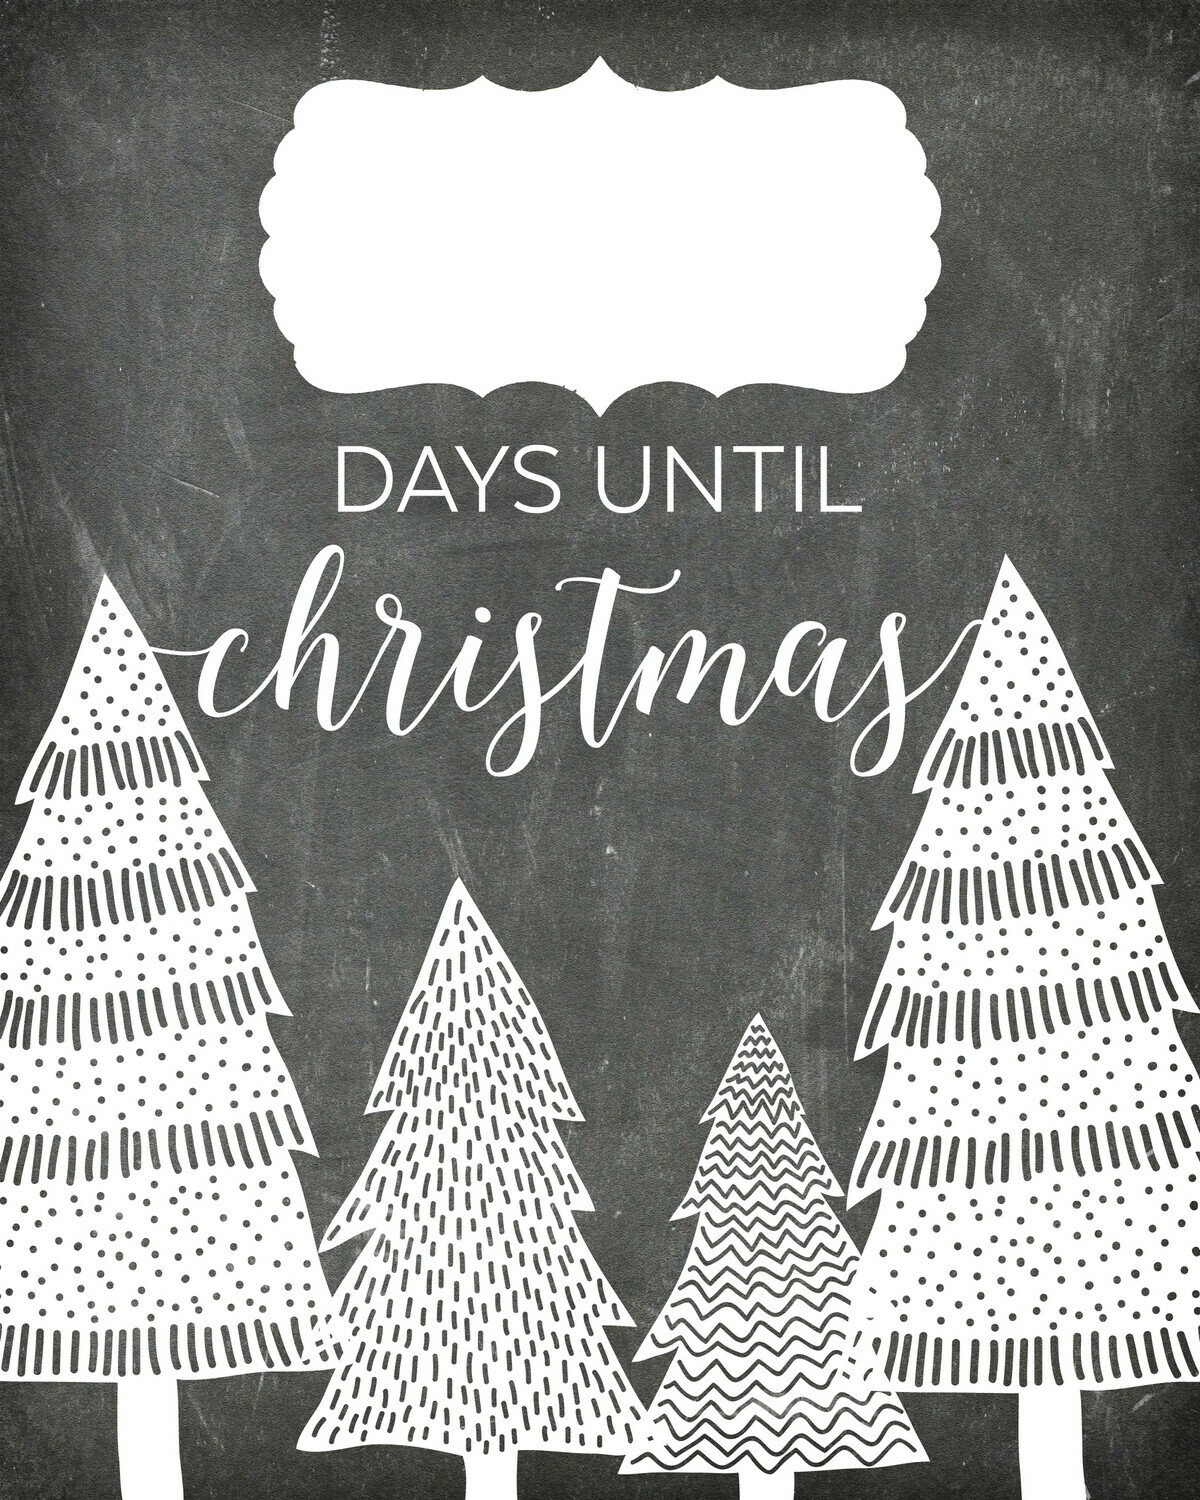 Countdown "Days Until Christmas" Free Chalkboard Printable